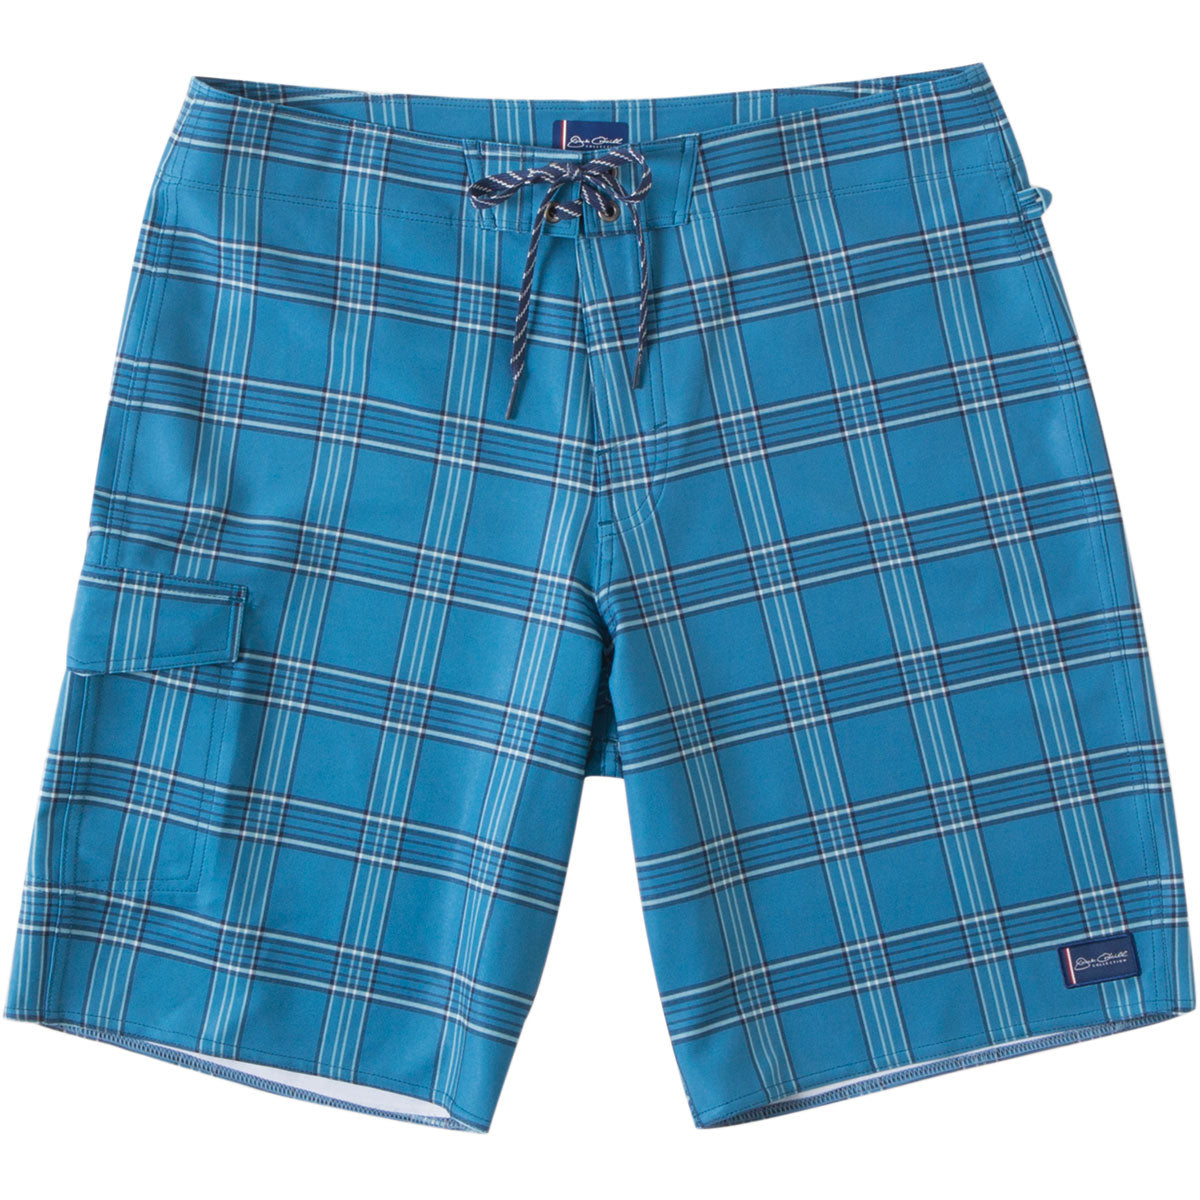 O'Neill Jack O'Neill Coastline Men's Boardshort Shorts - Celestial Blue